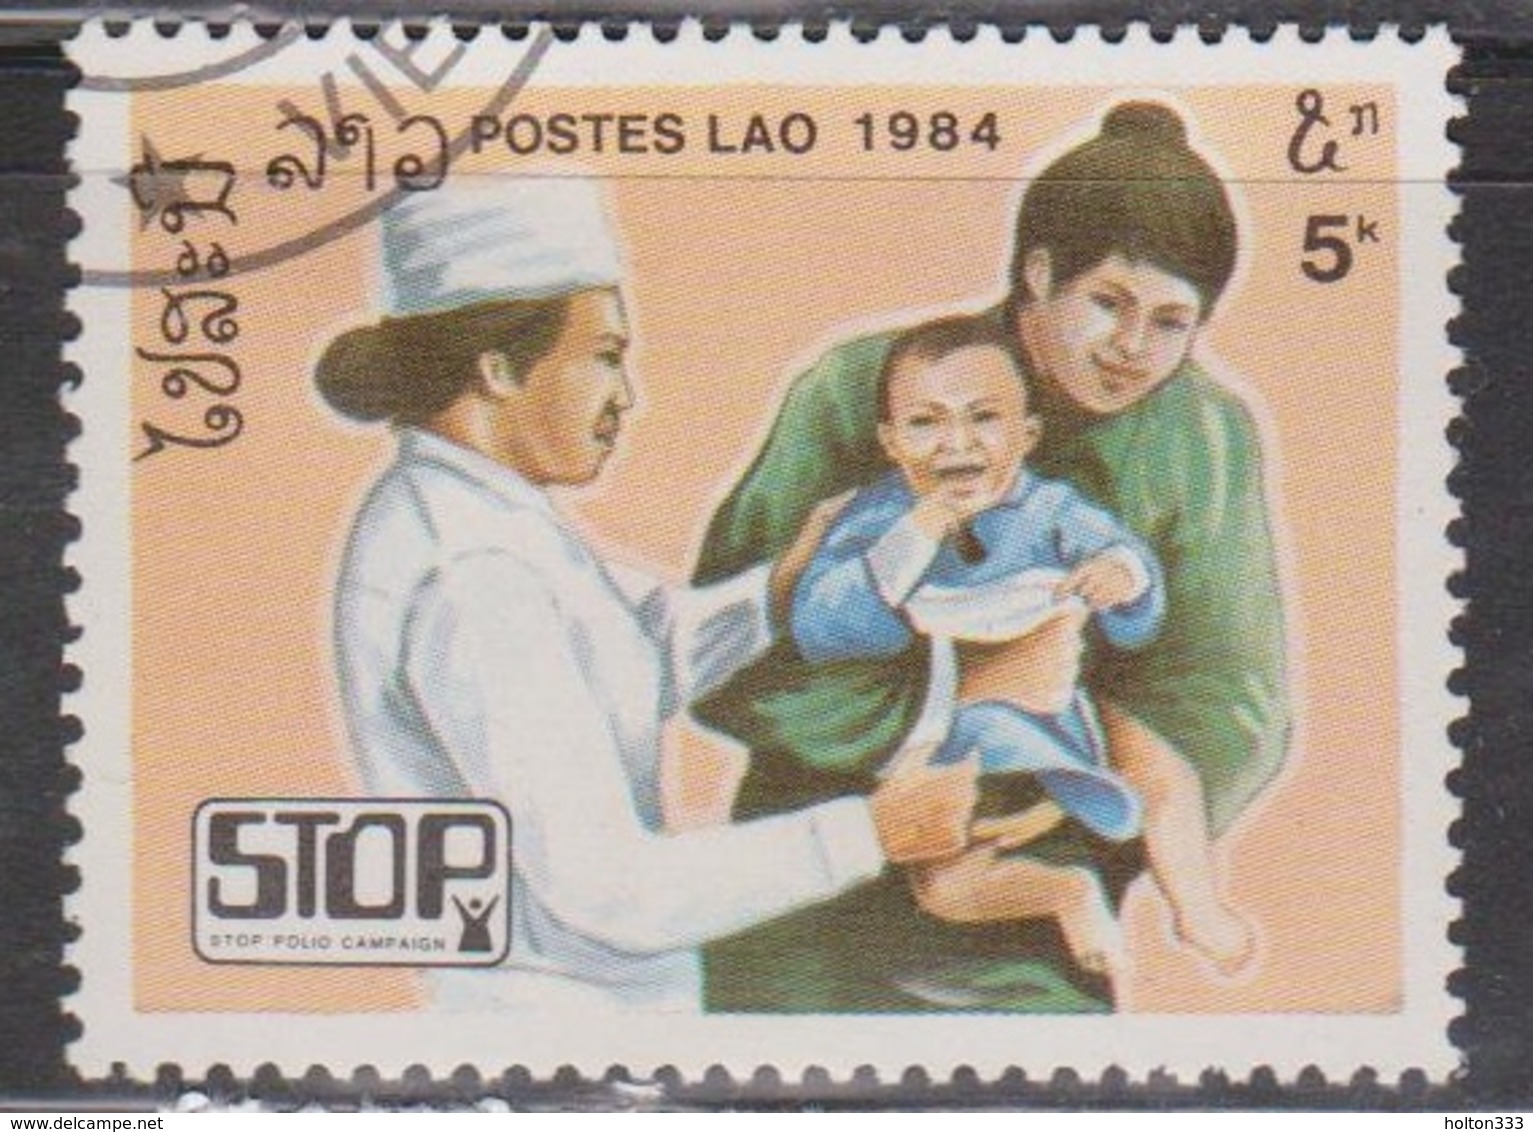 LAOS Scott # 599 Used - Nurse, Mother & Child - Laos